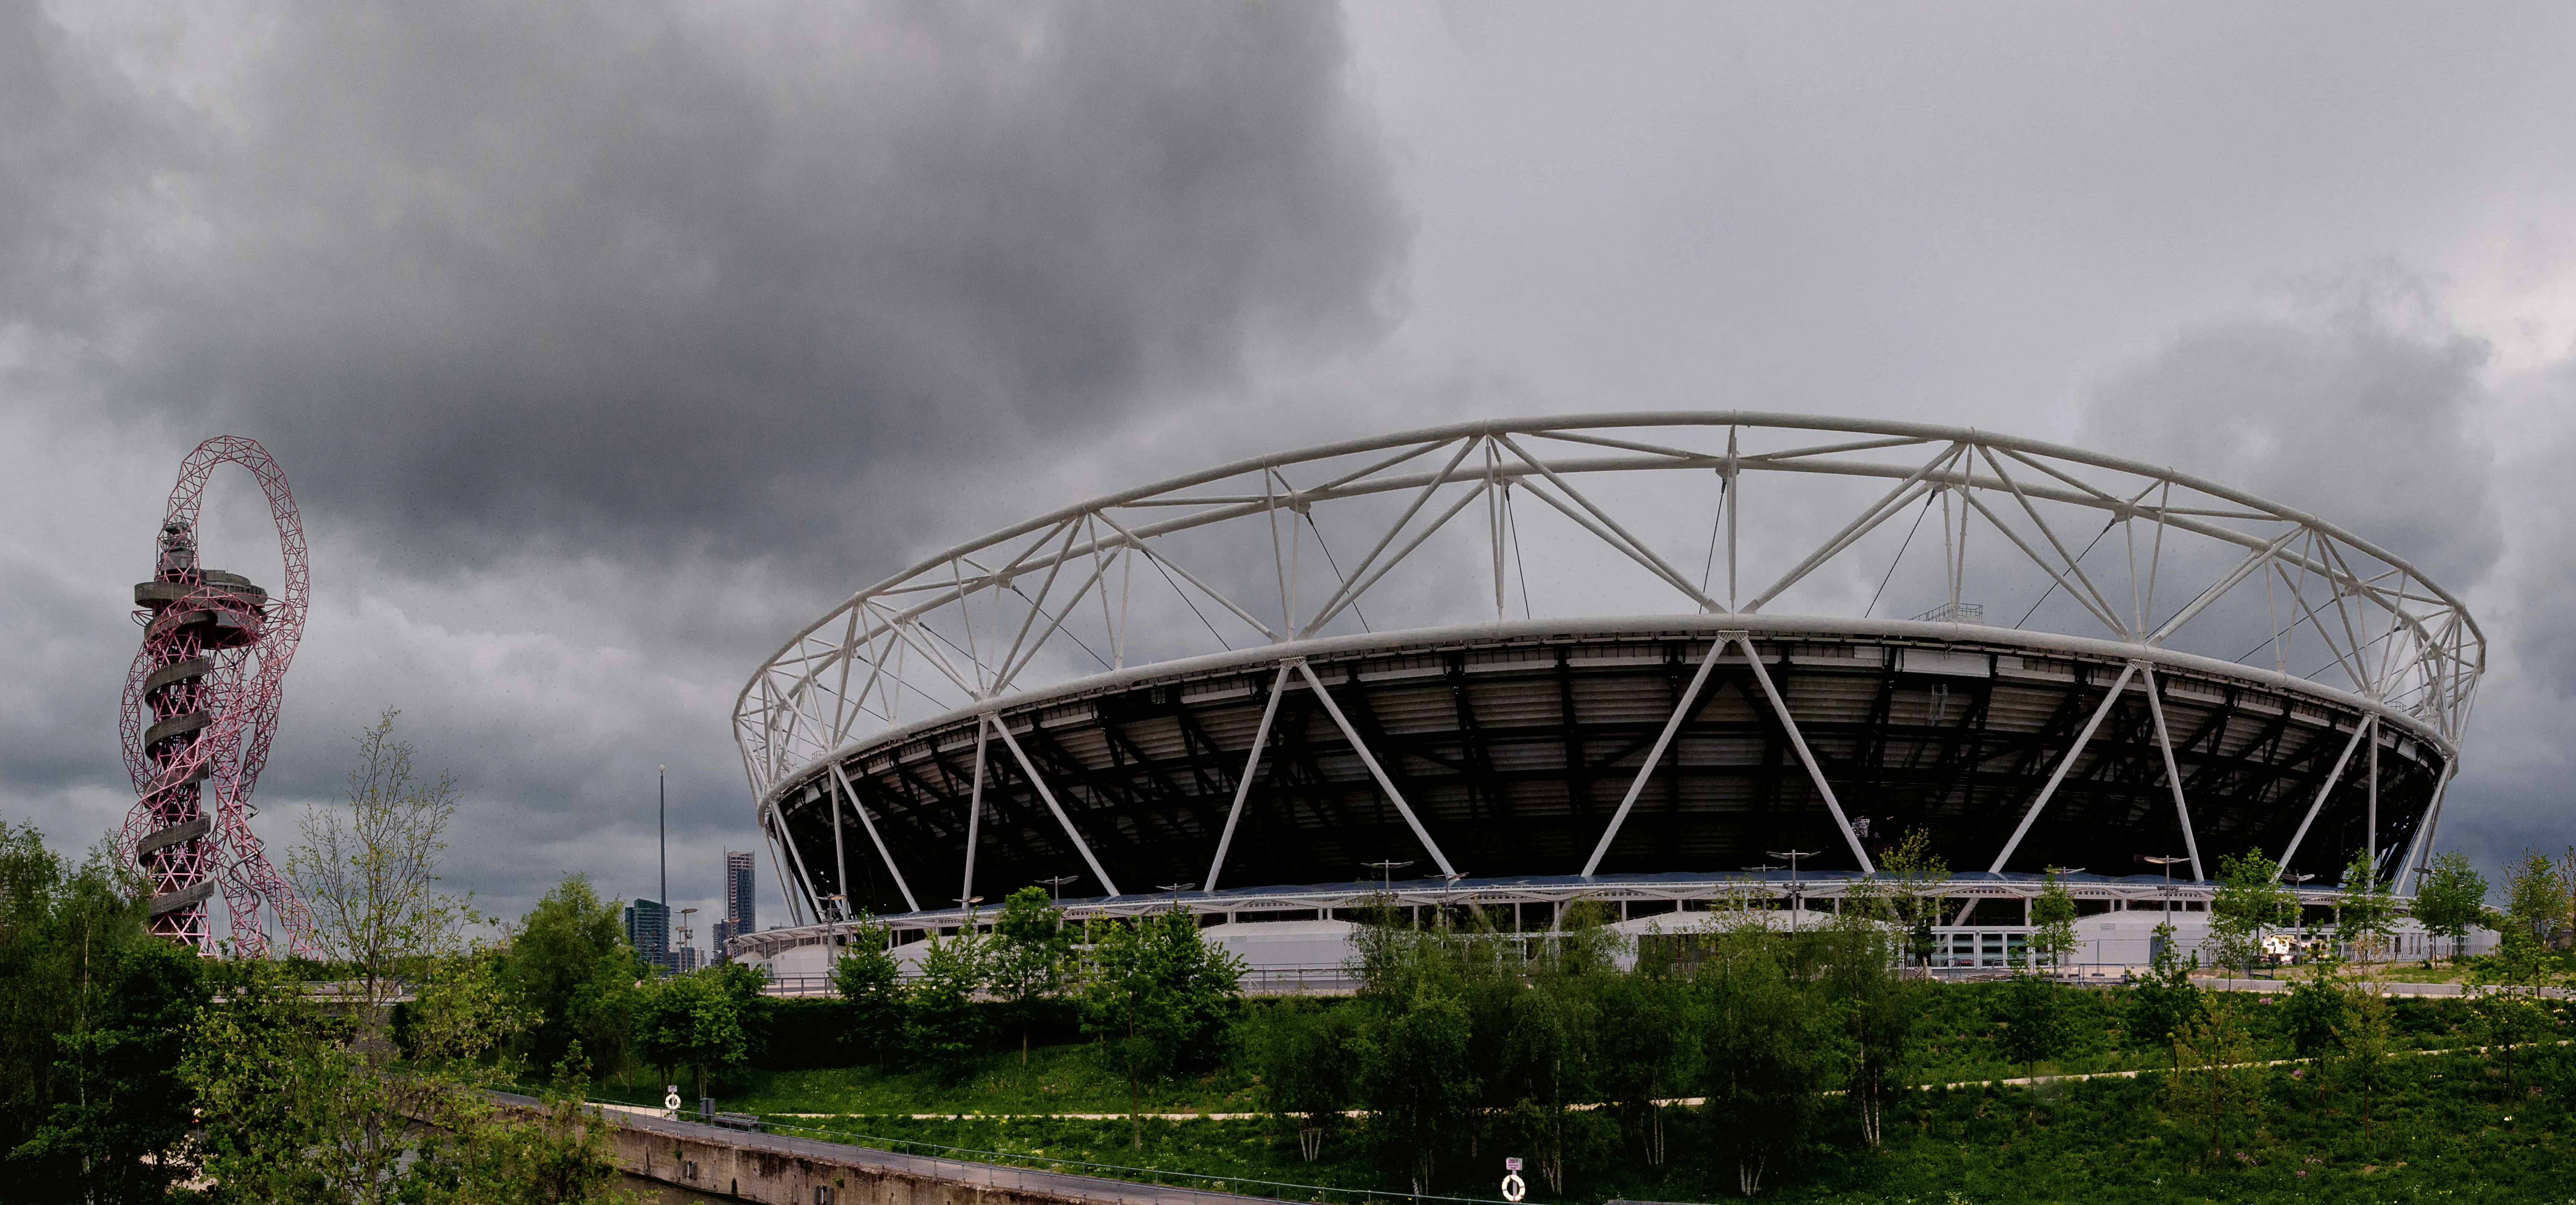 The Stadium at Queen Elizabeth Olympic Park, London